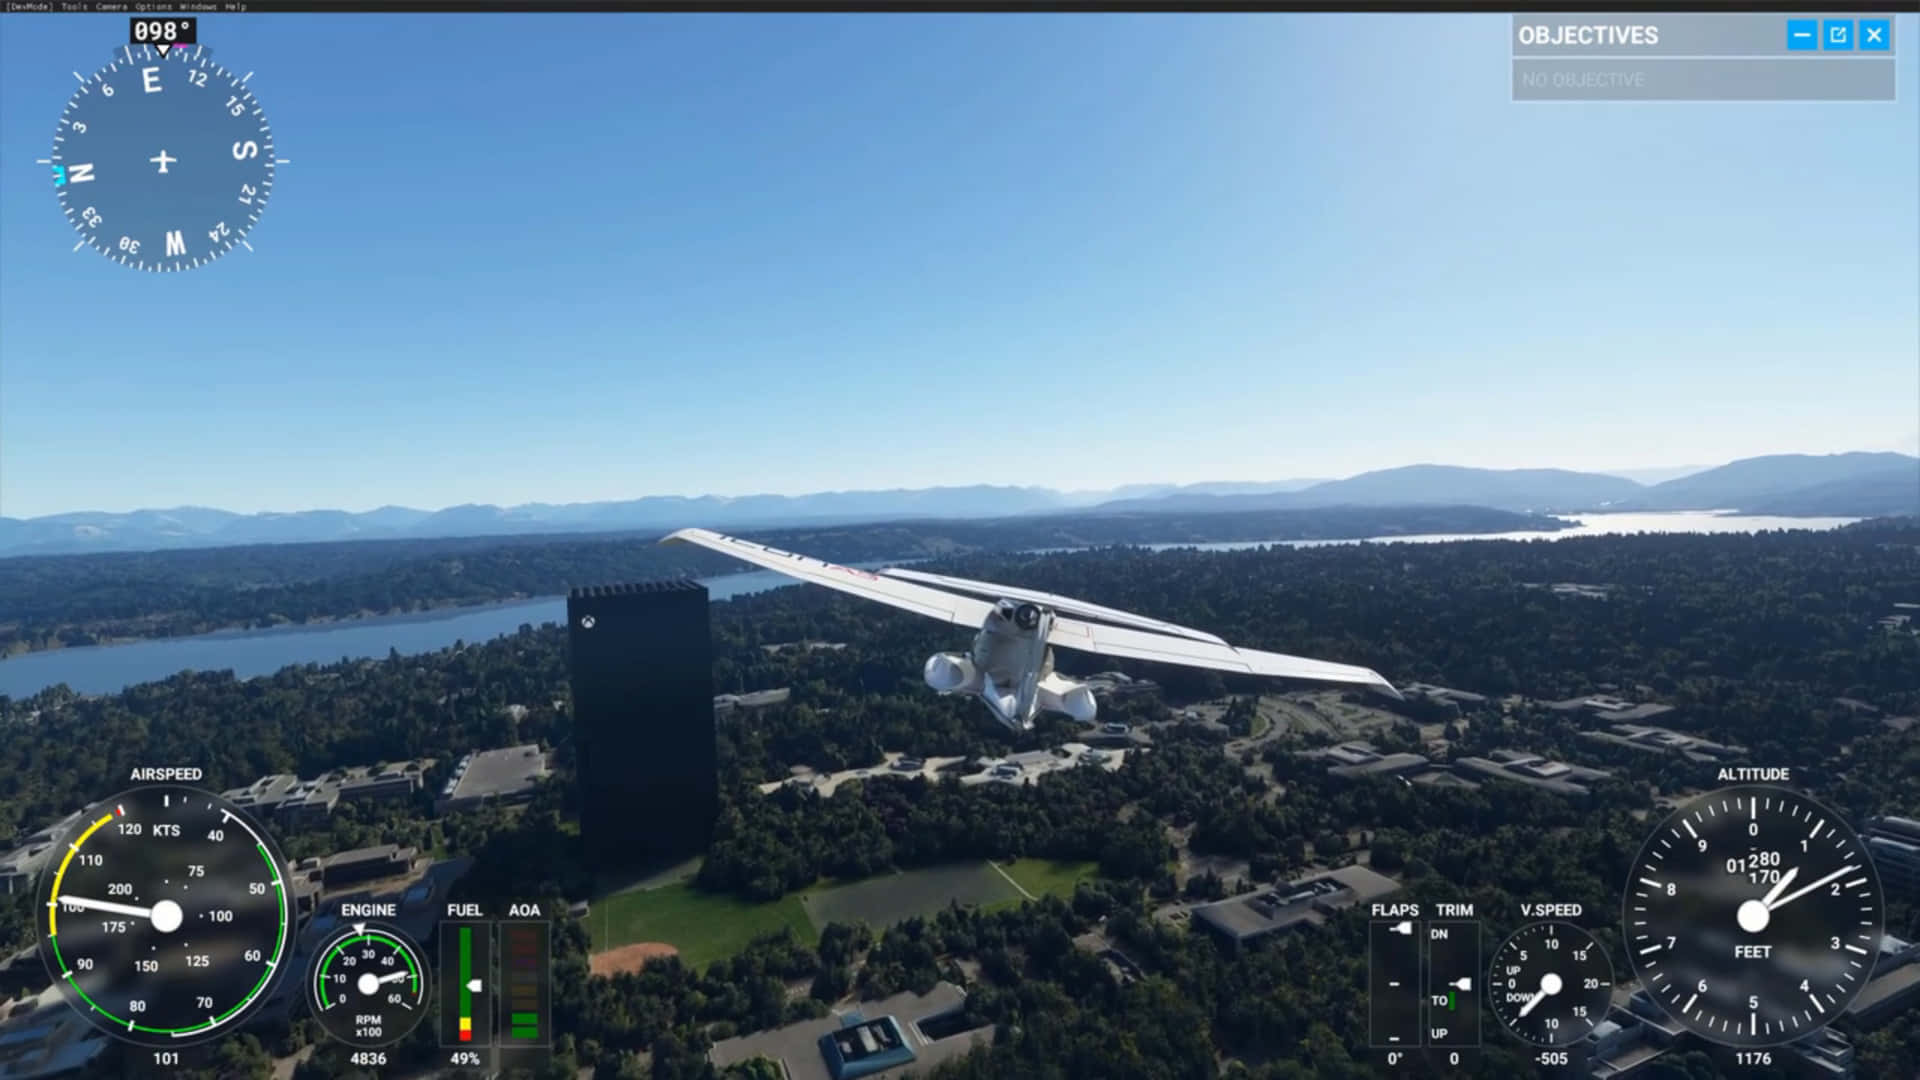 “Explore the Skies with Microsoft Flight Simulator”